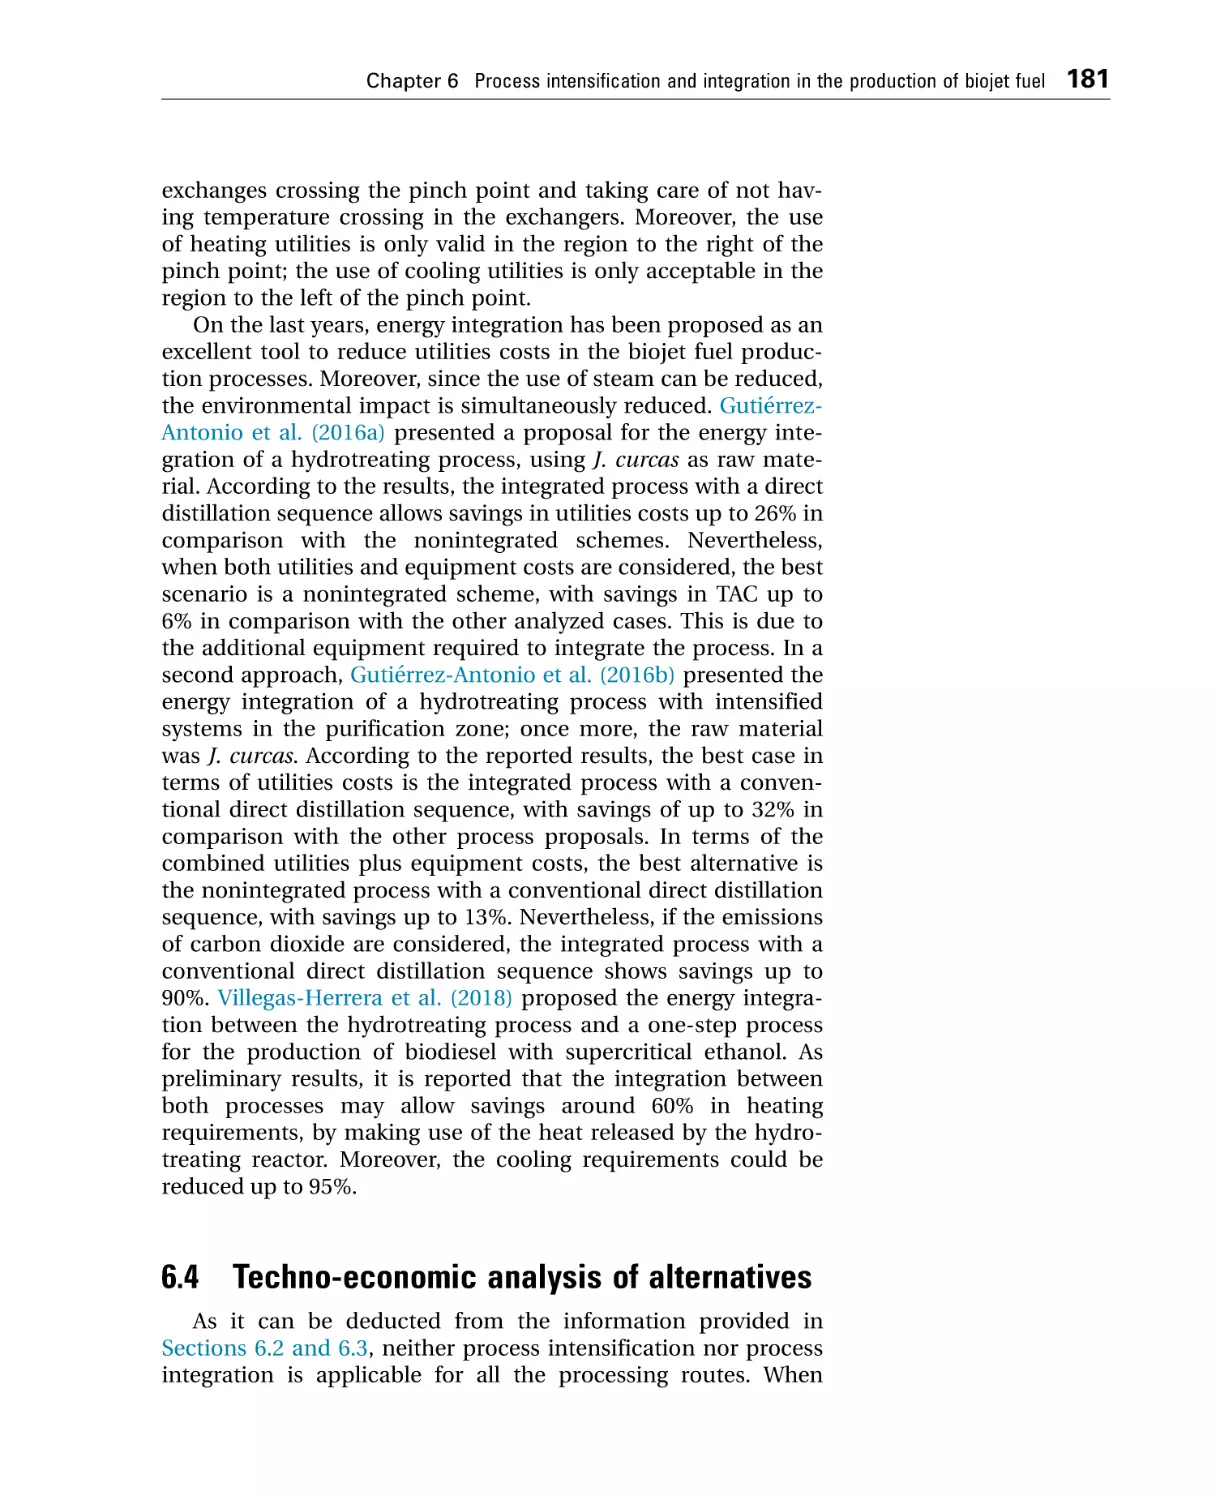 6.4 Techno-economic analysis of alternatives